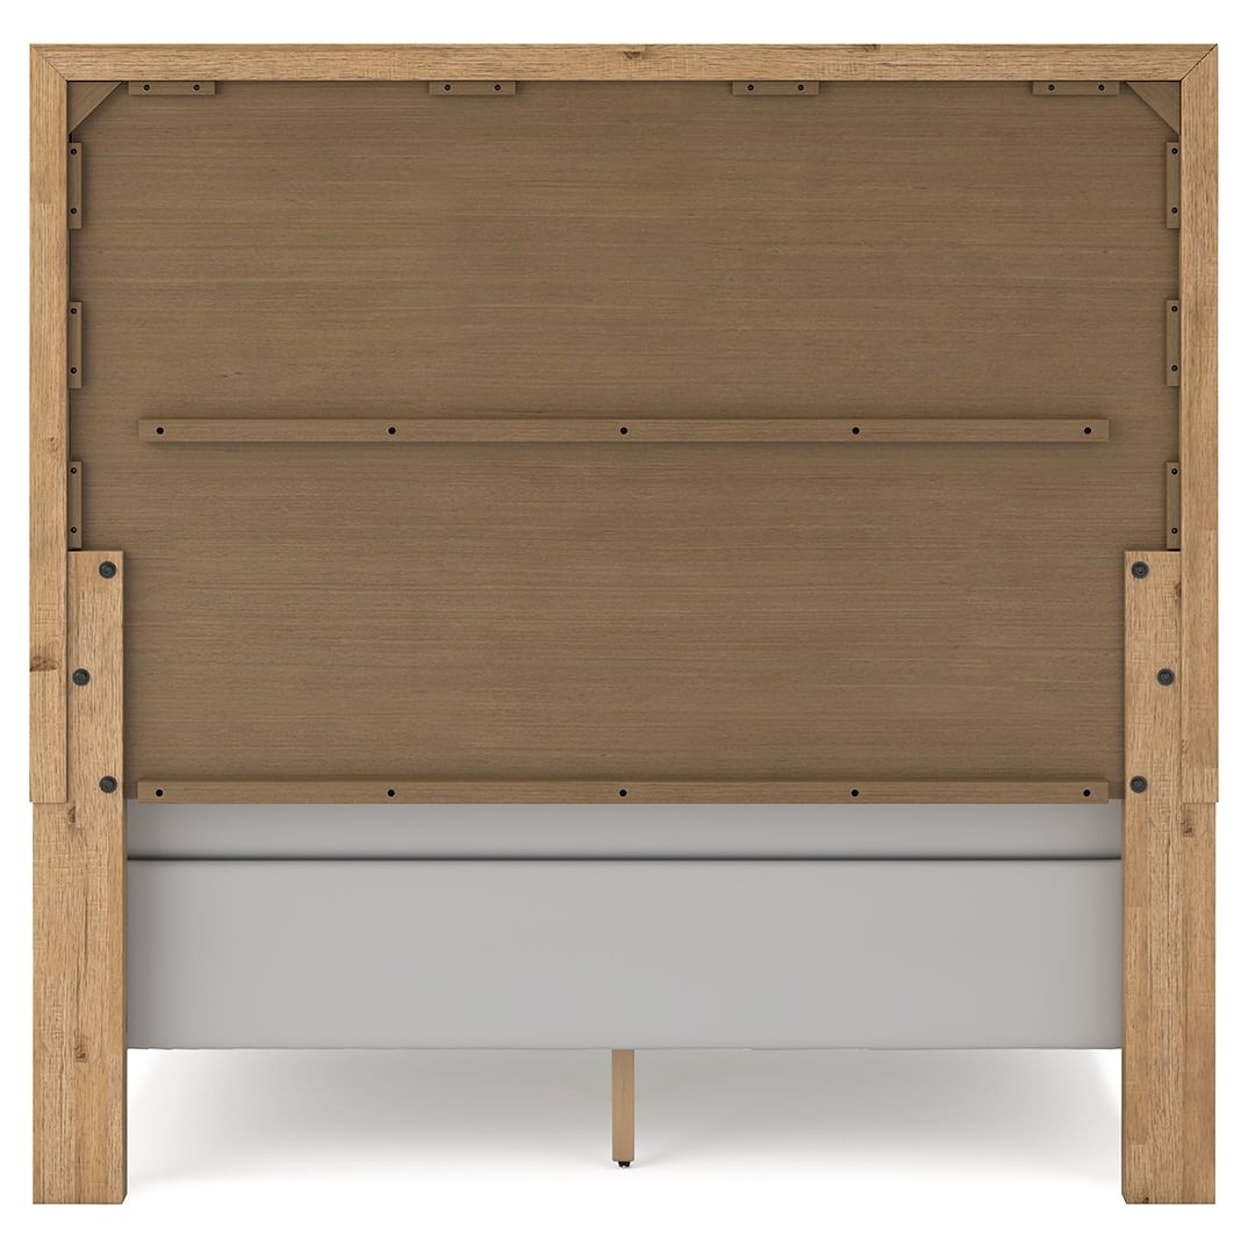 Ashley Furniture Signature Design Galliden Queen Panel Bed